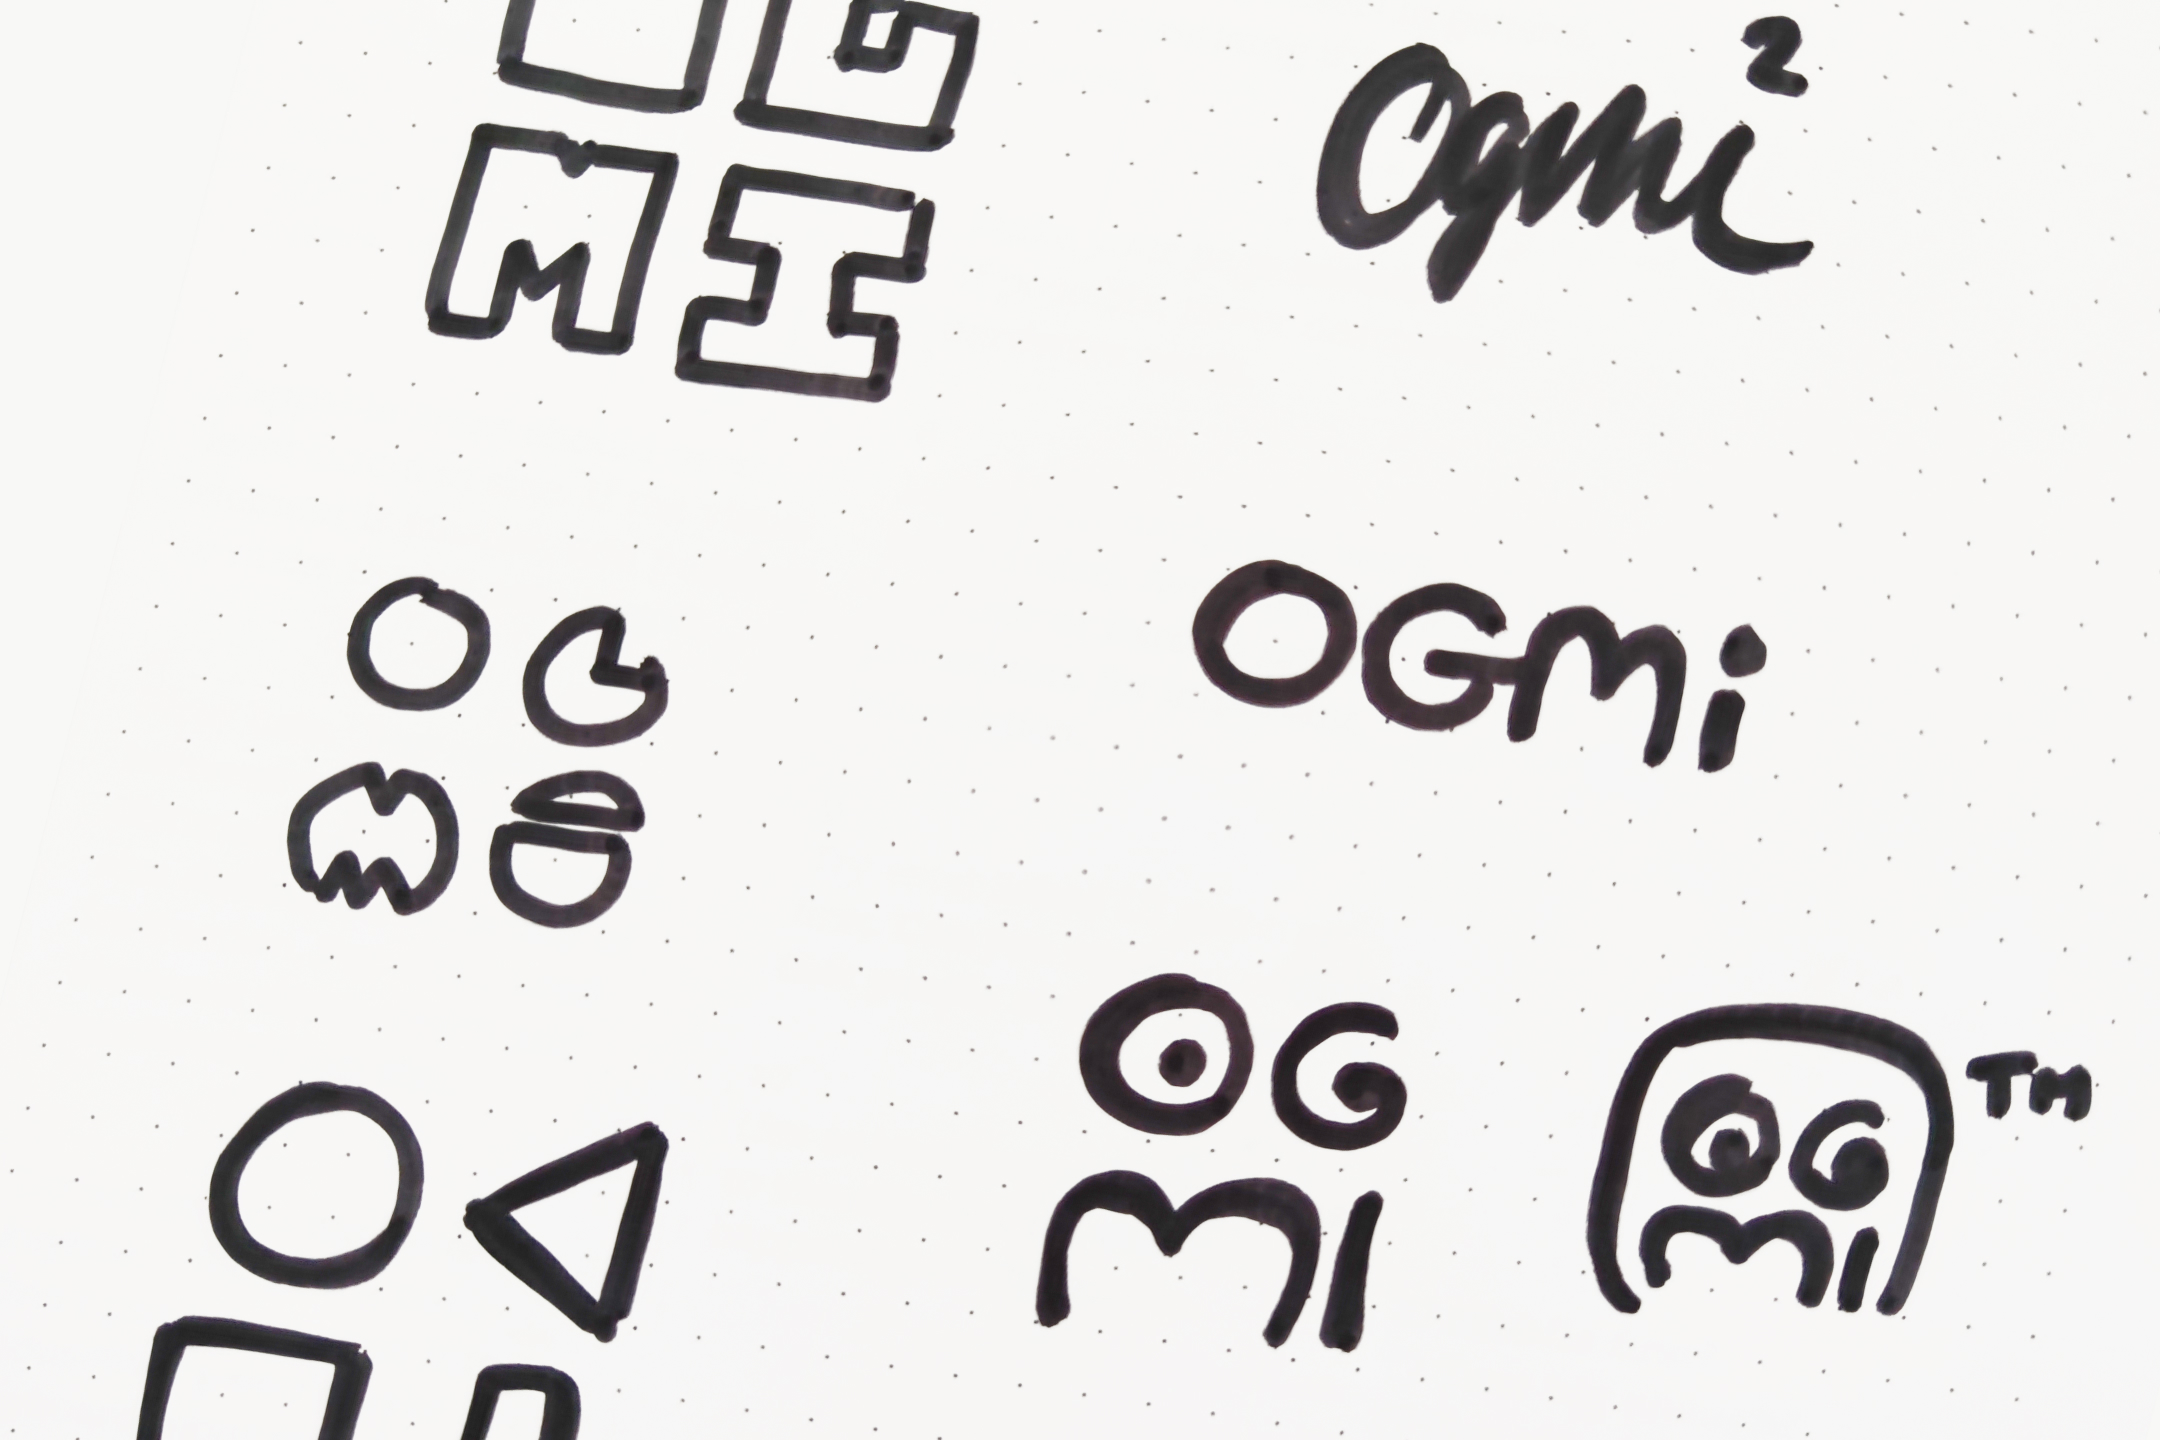 Ogmi logo sketches